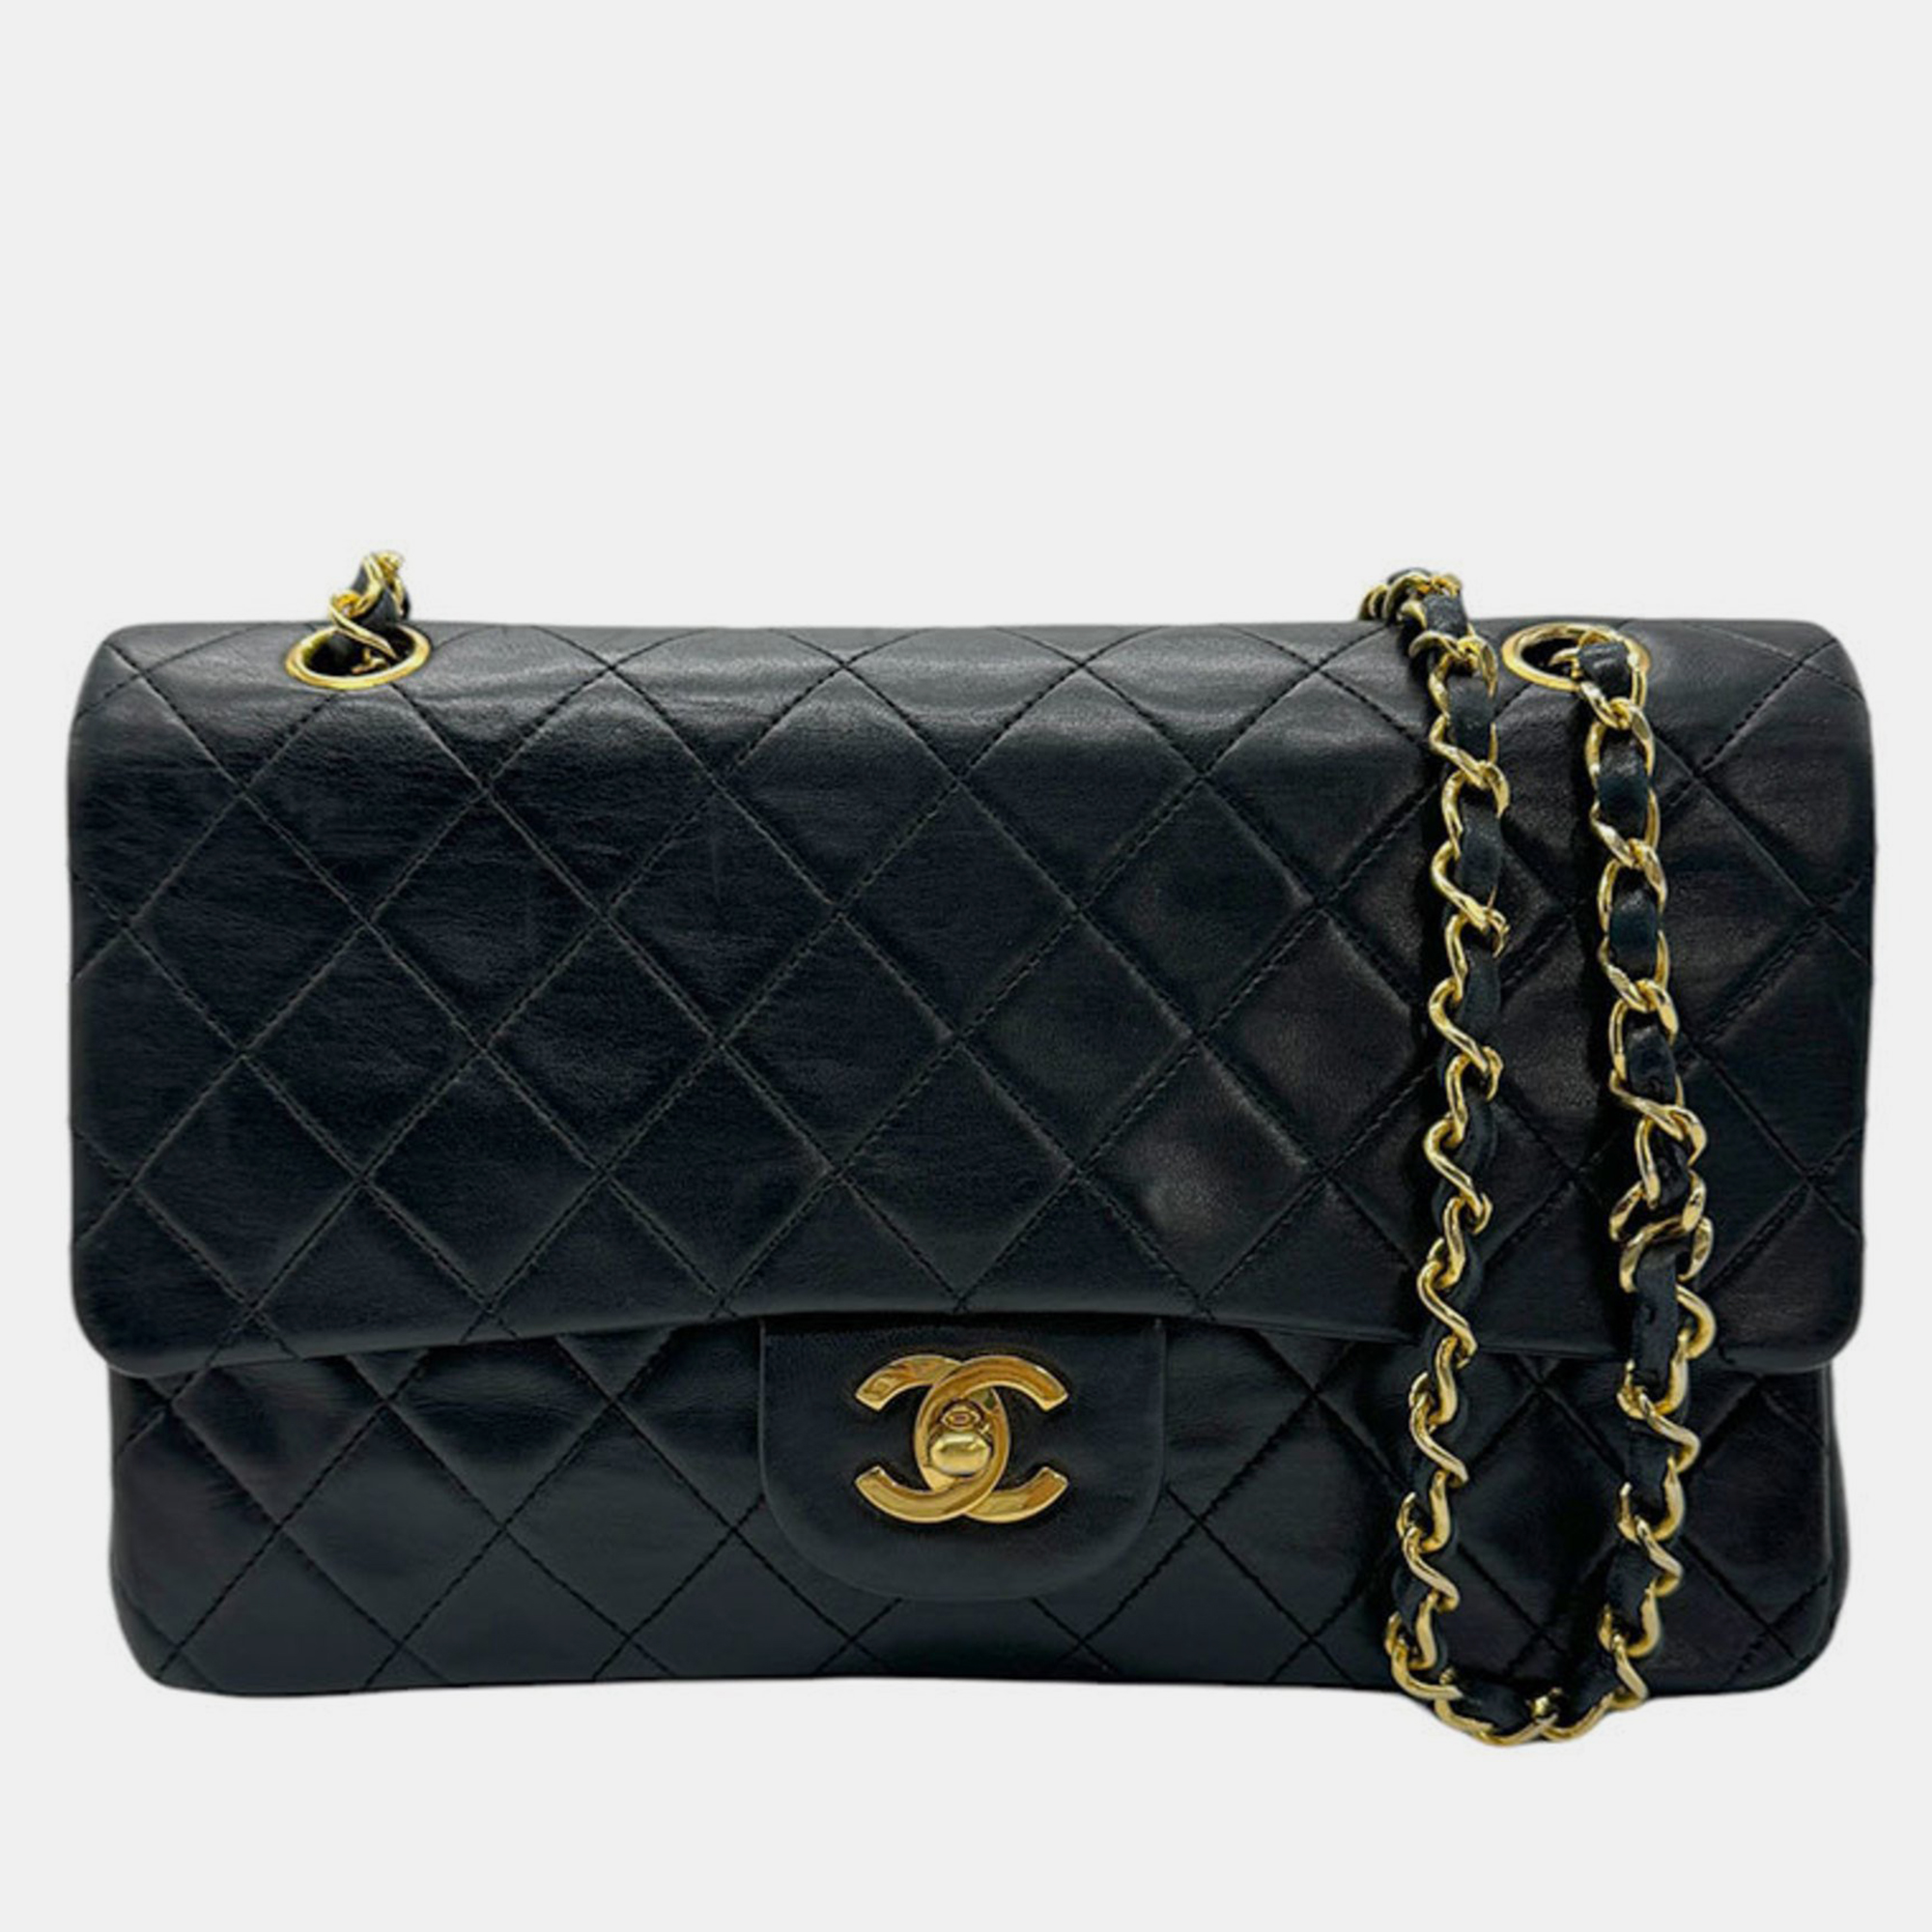 Chanel black leather classic medium double flap shoulder bag